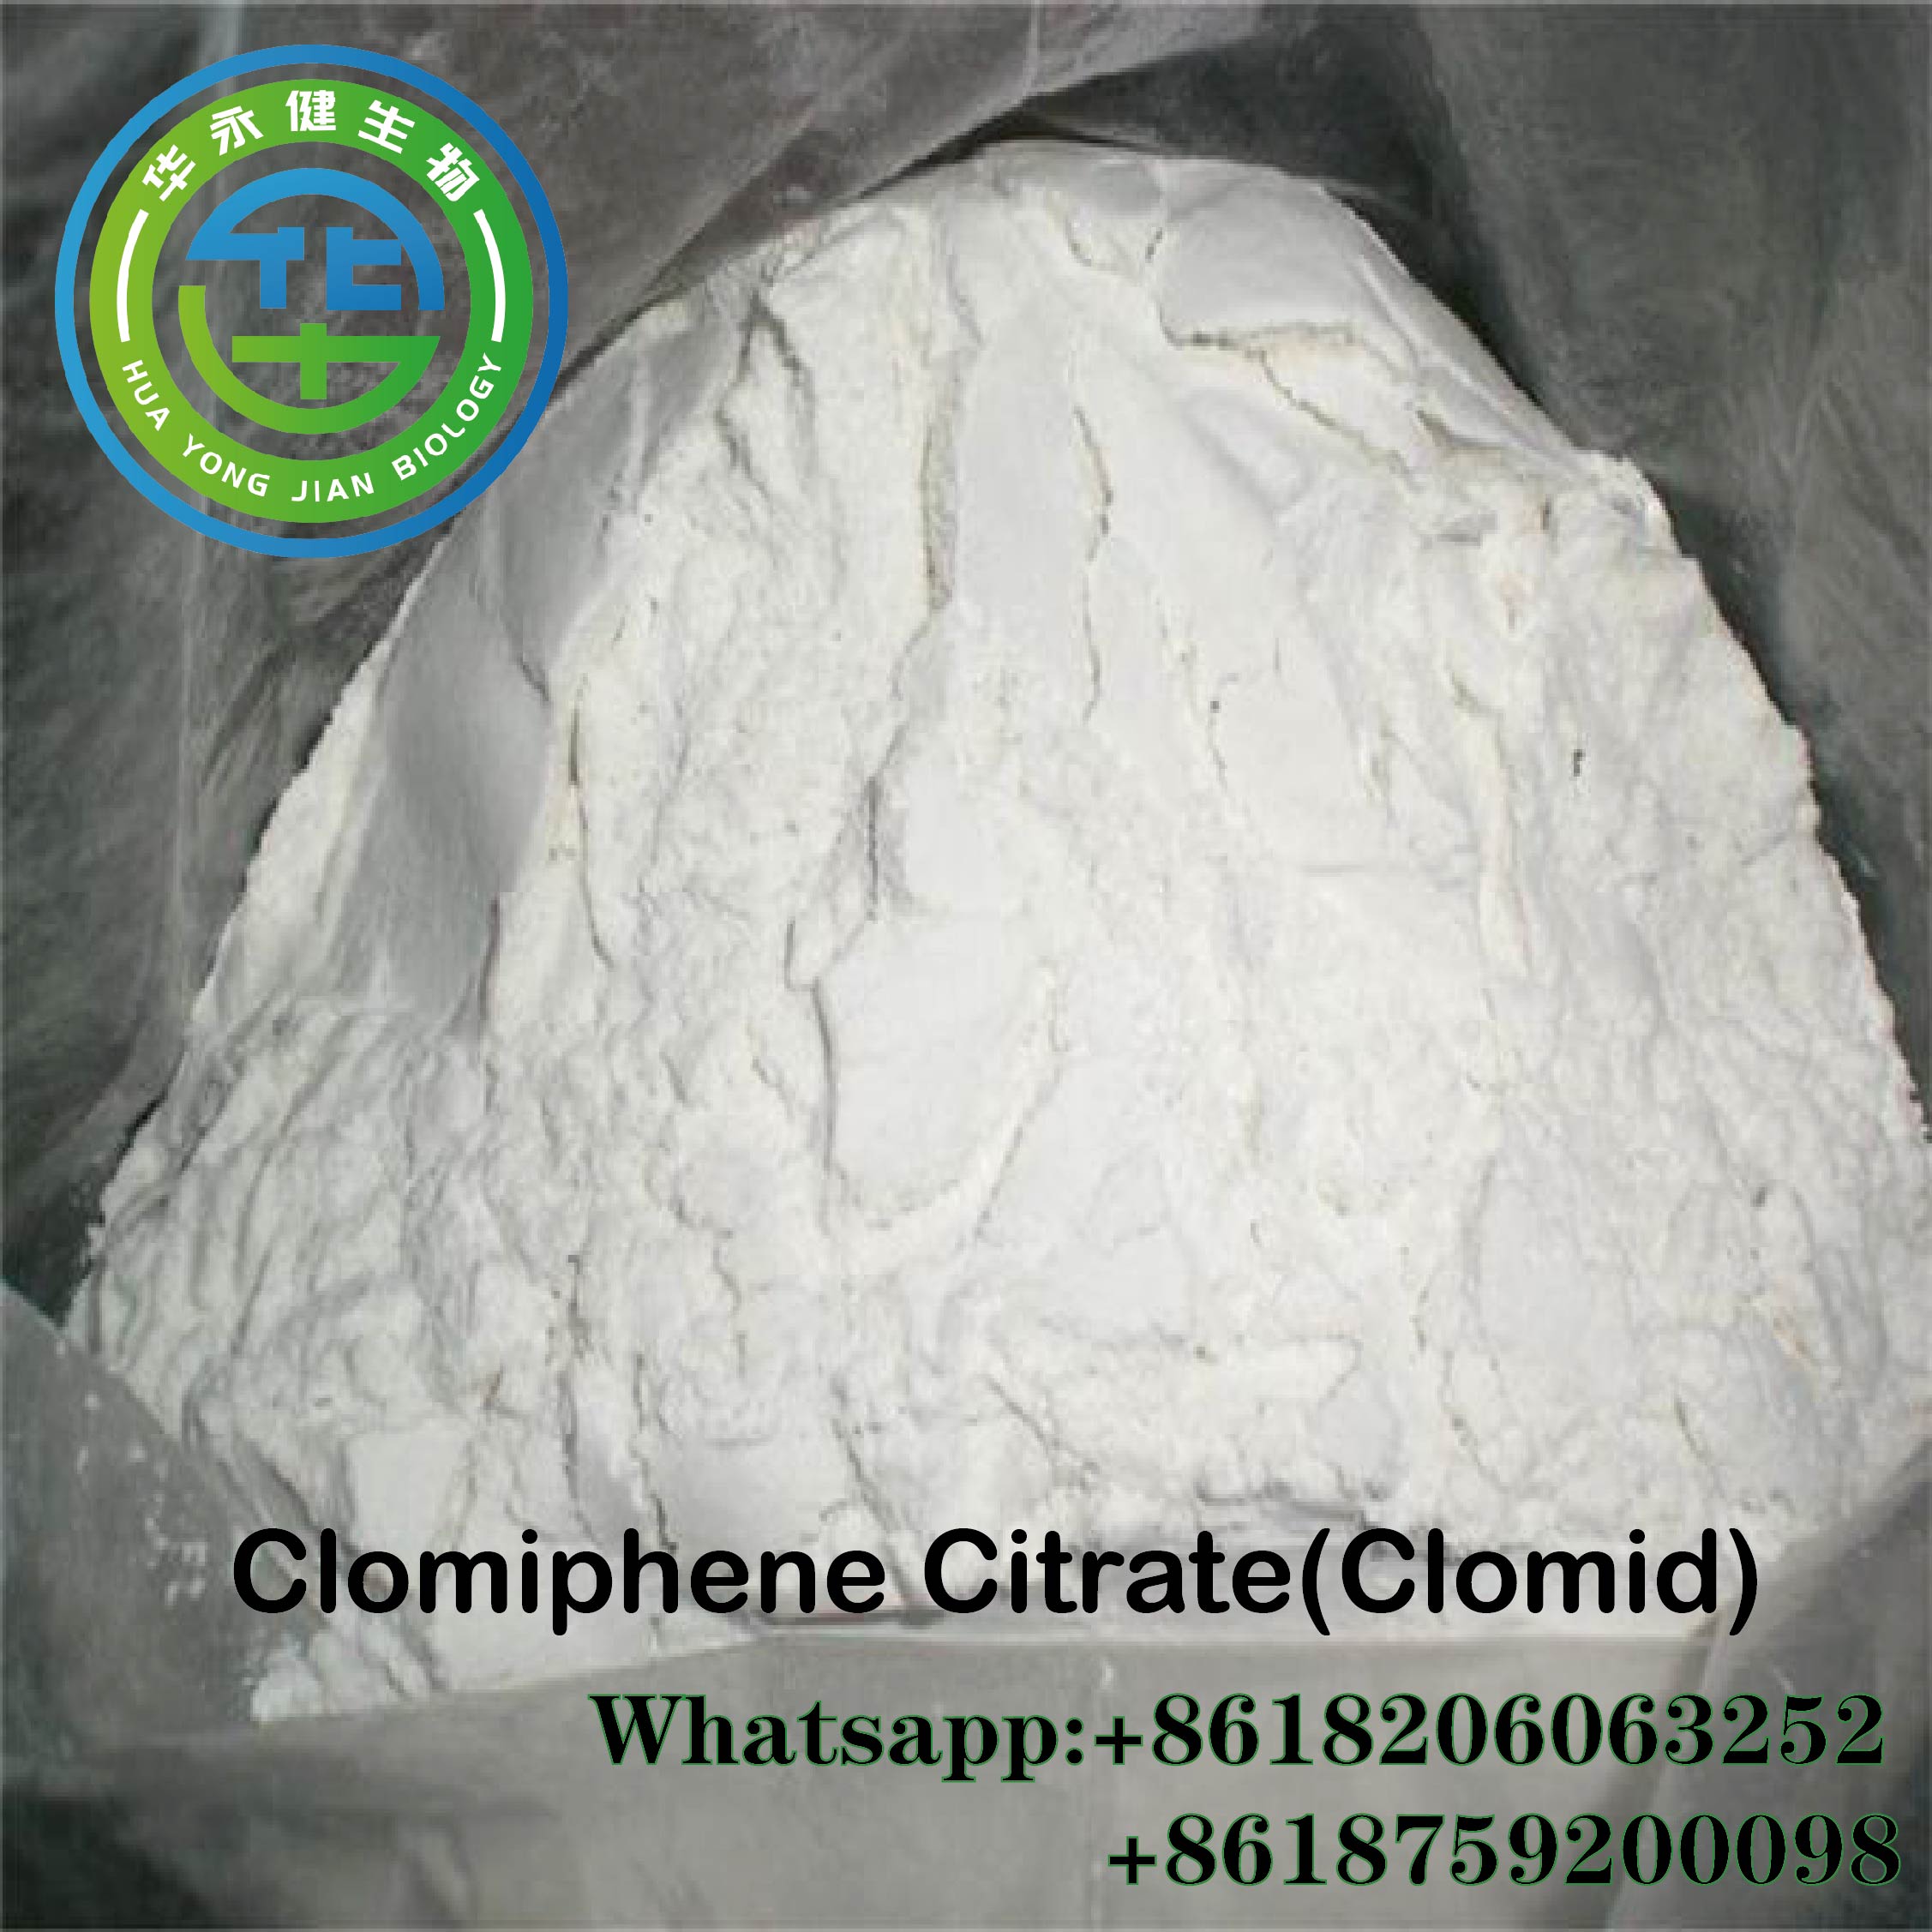 Clomid Powder GMP For Female Anti Estrogen Drugs Bodybuilding Powder Clomiphene Citrate CasNO. 50-41-9